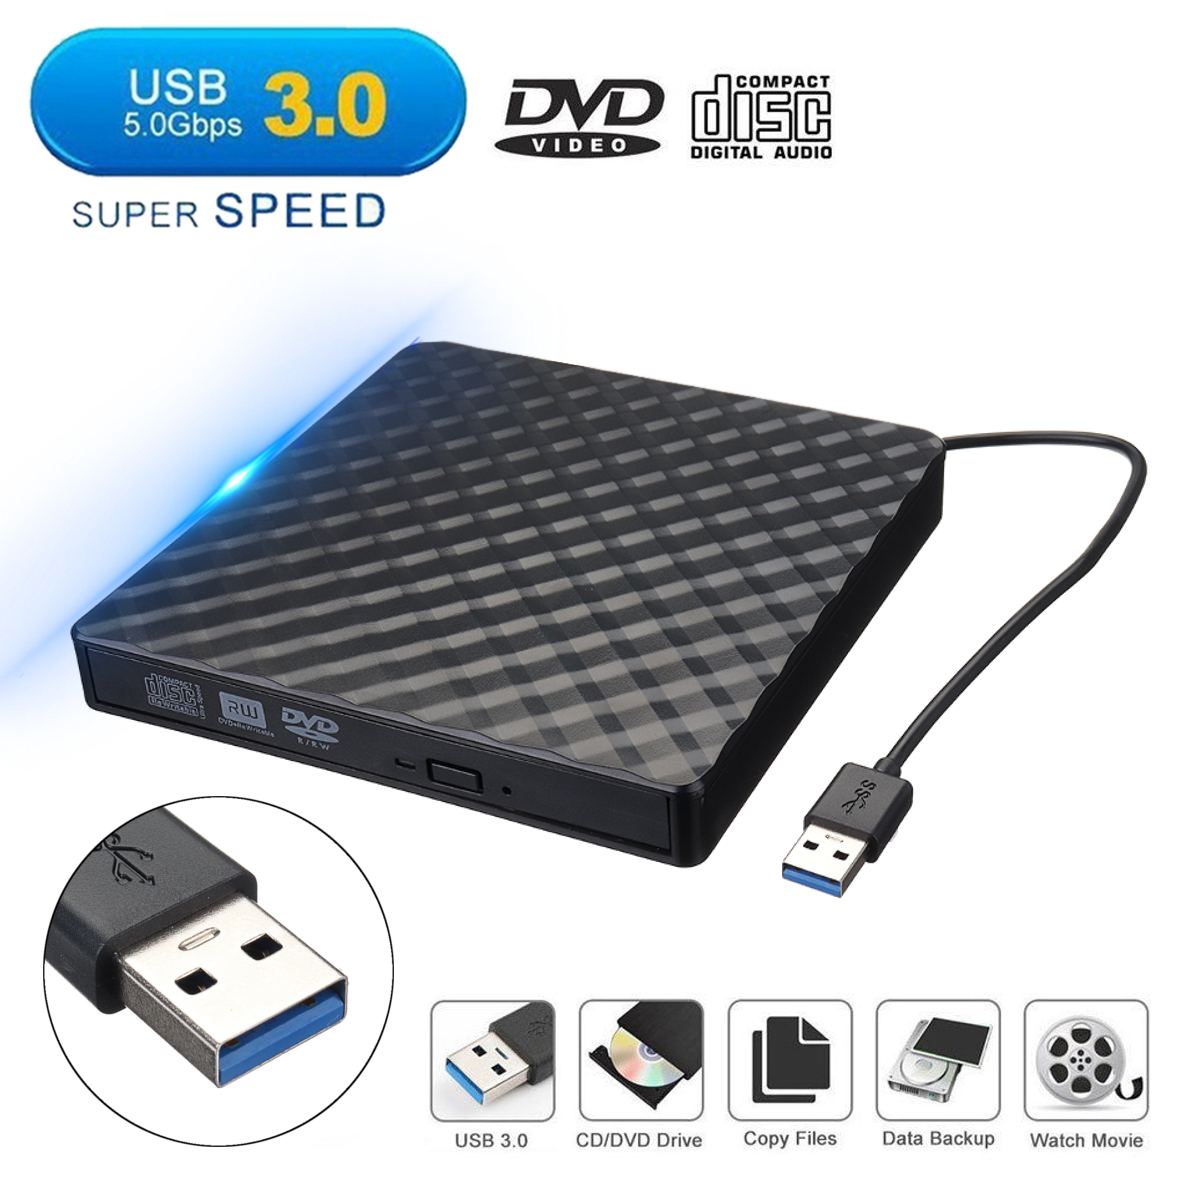 External-USB30-DVD-RW-CD-Writer-Slim-Optical-Drive-Burner-Reader-Player-For-PC-Laptop-1633940-1